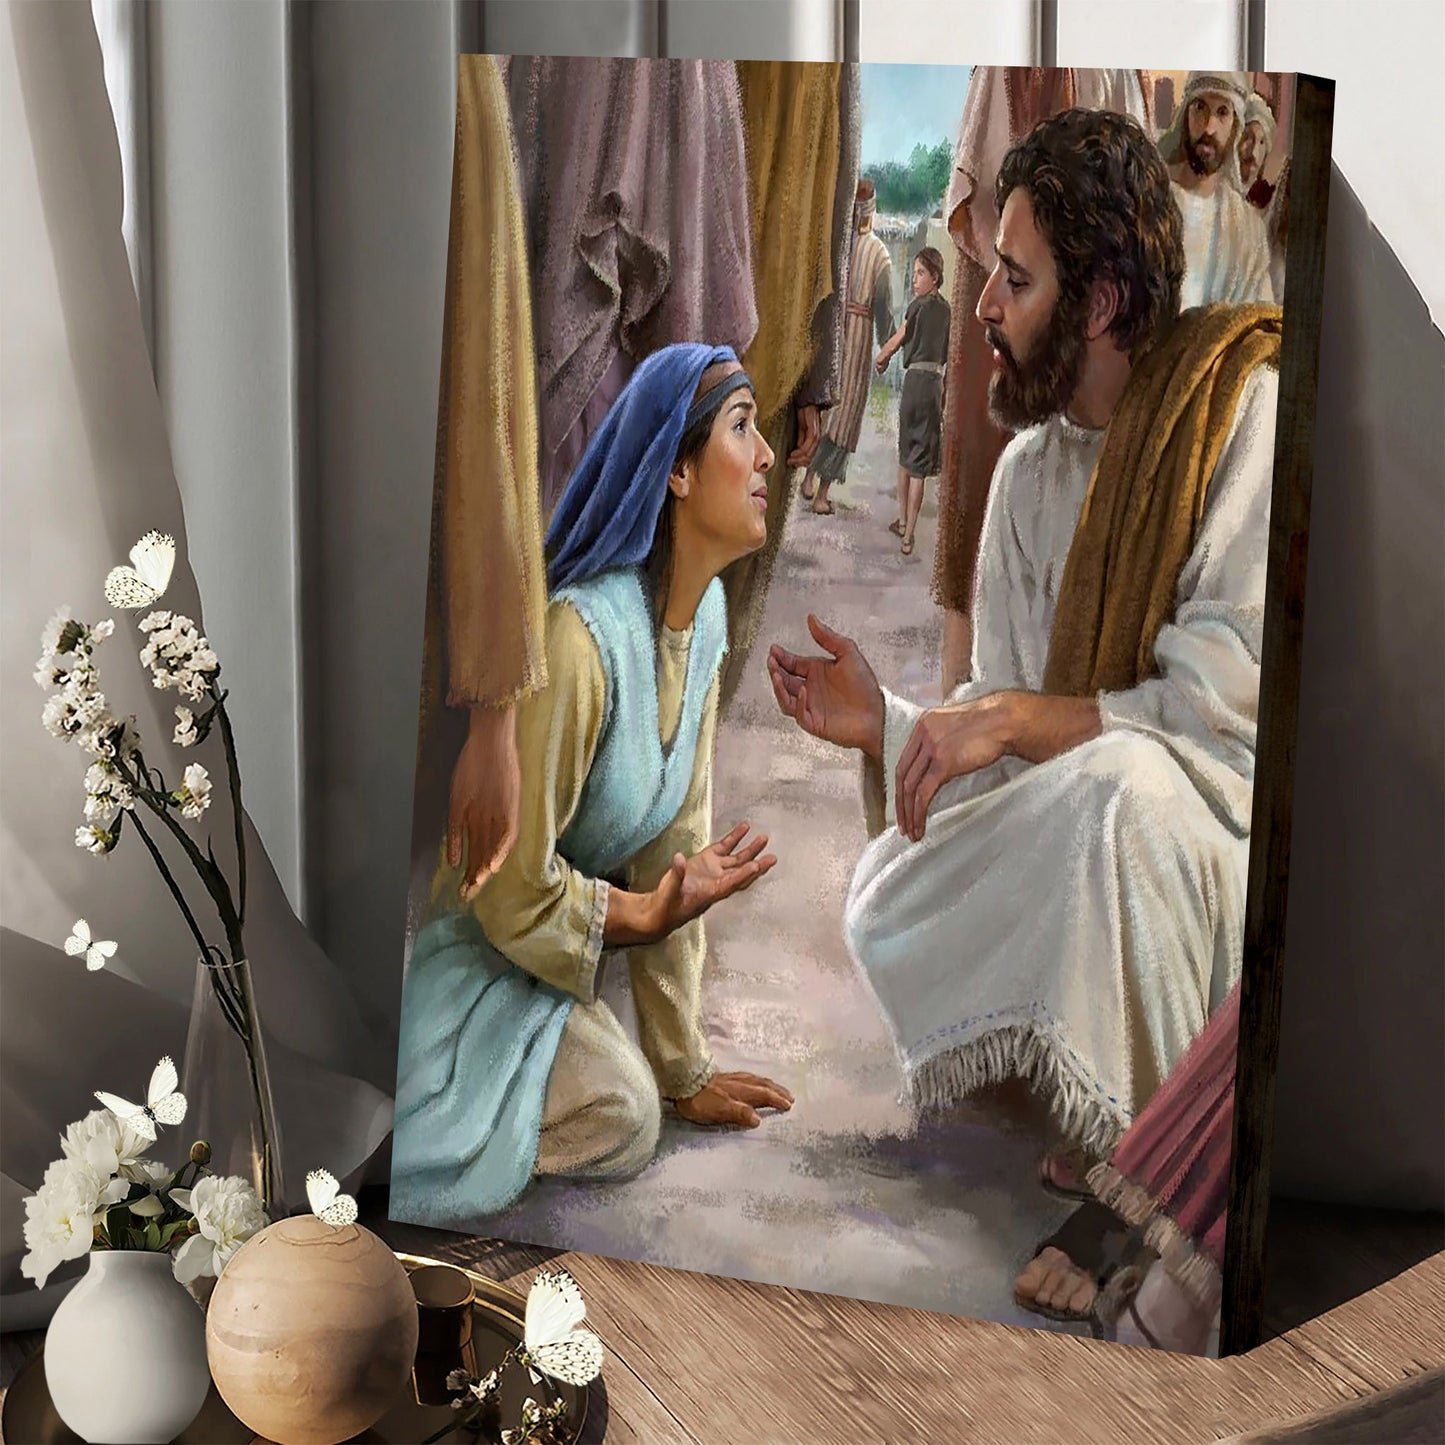 Jesus Healing - Canvas Pictures - Jesus Canvas Art - Christian Wall Art